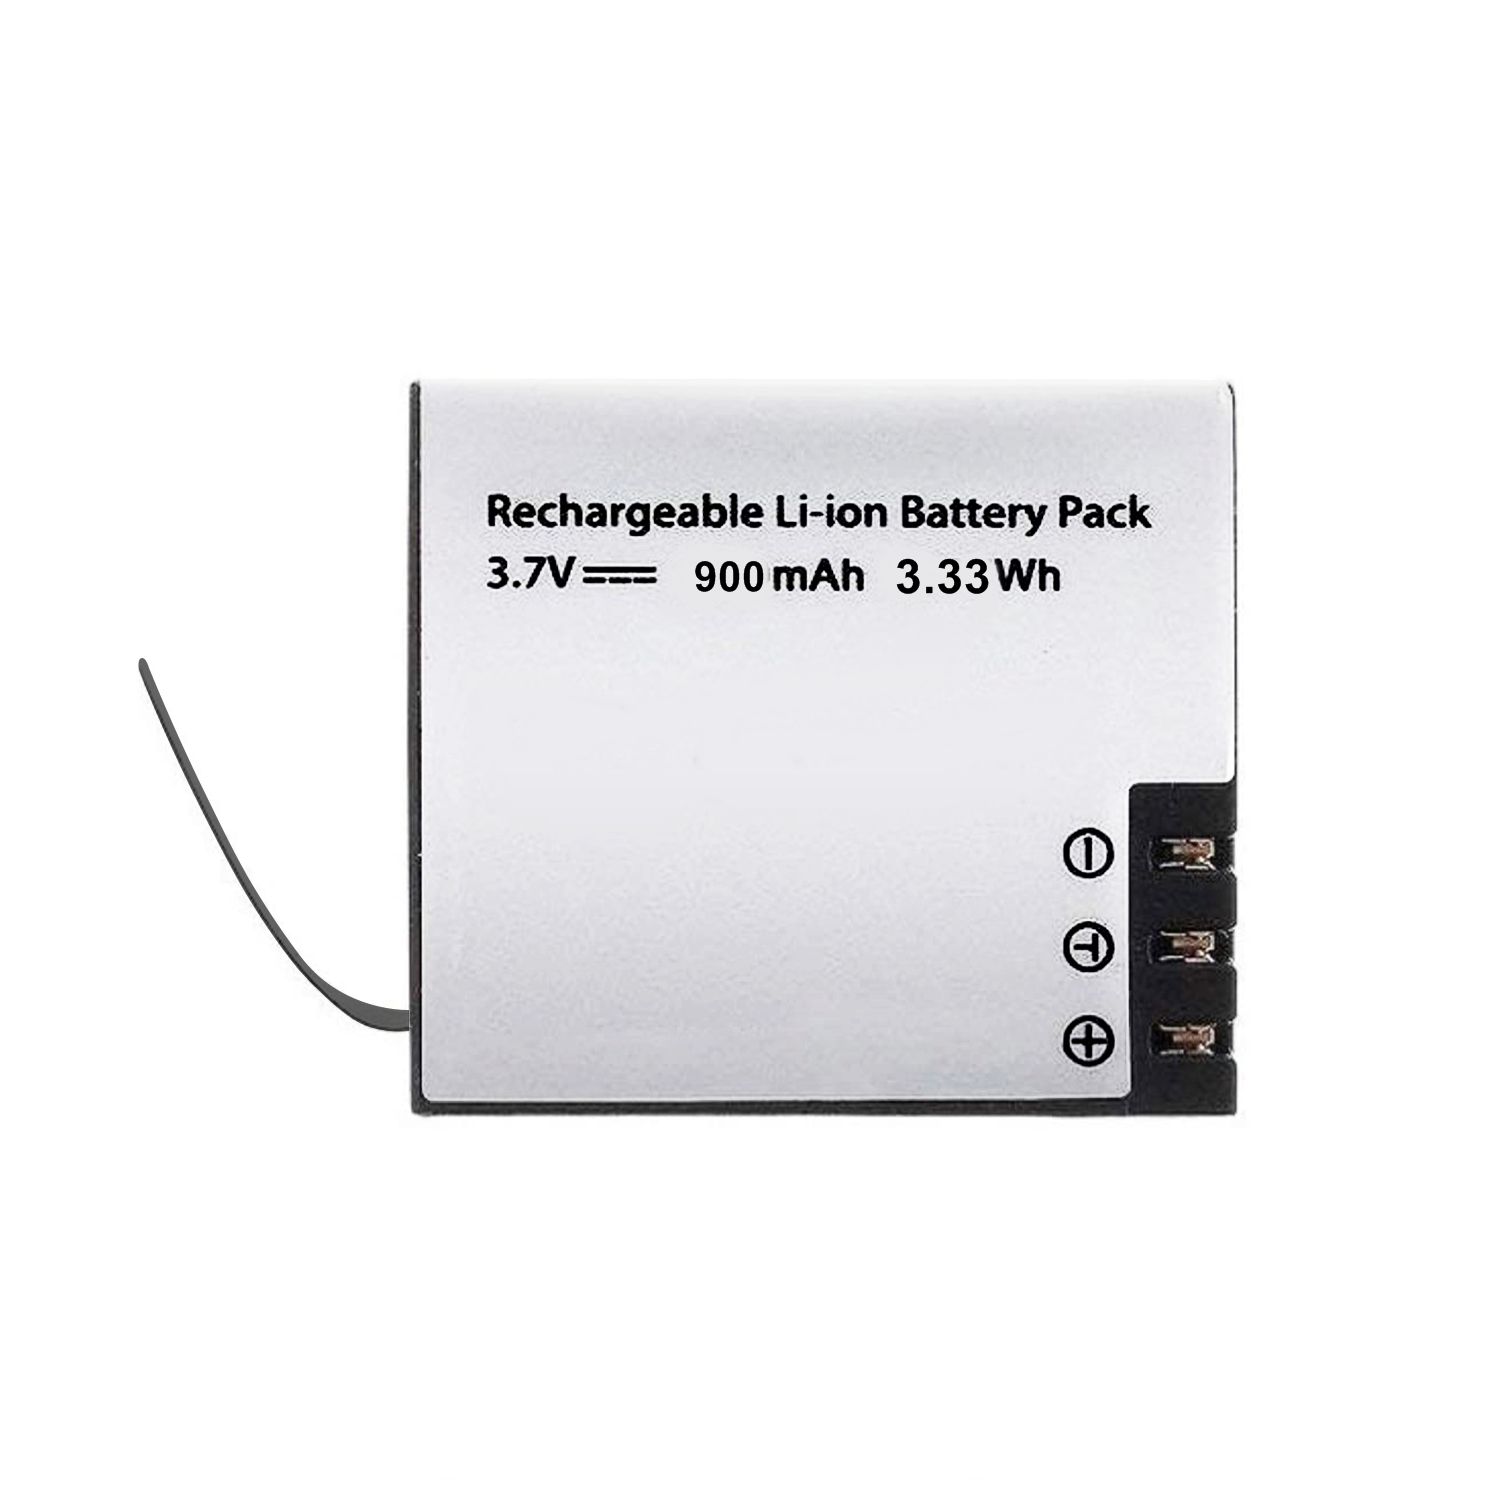 Rechargable Li - ion Battery Pack - IZI 